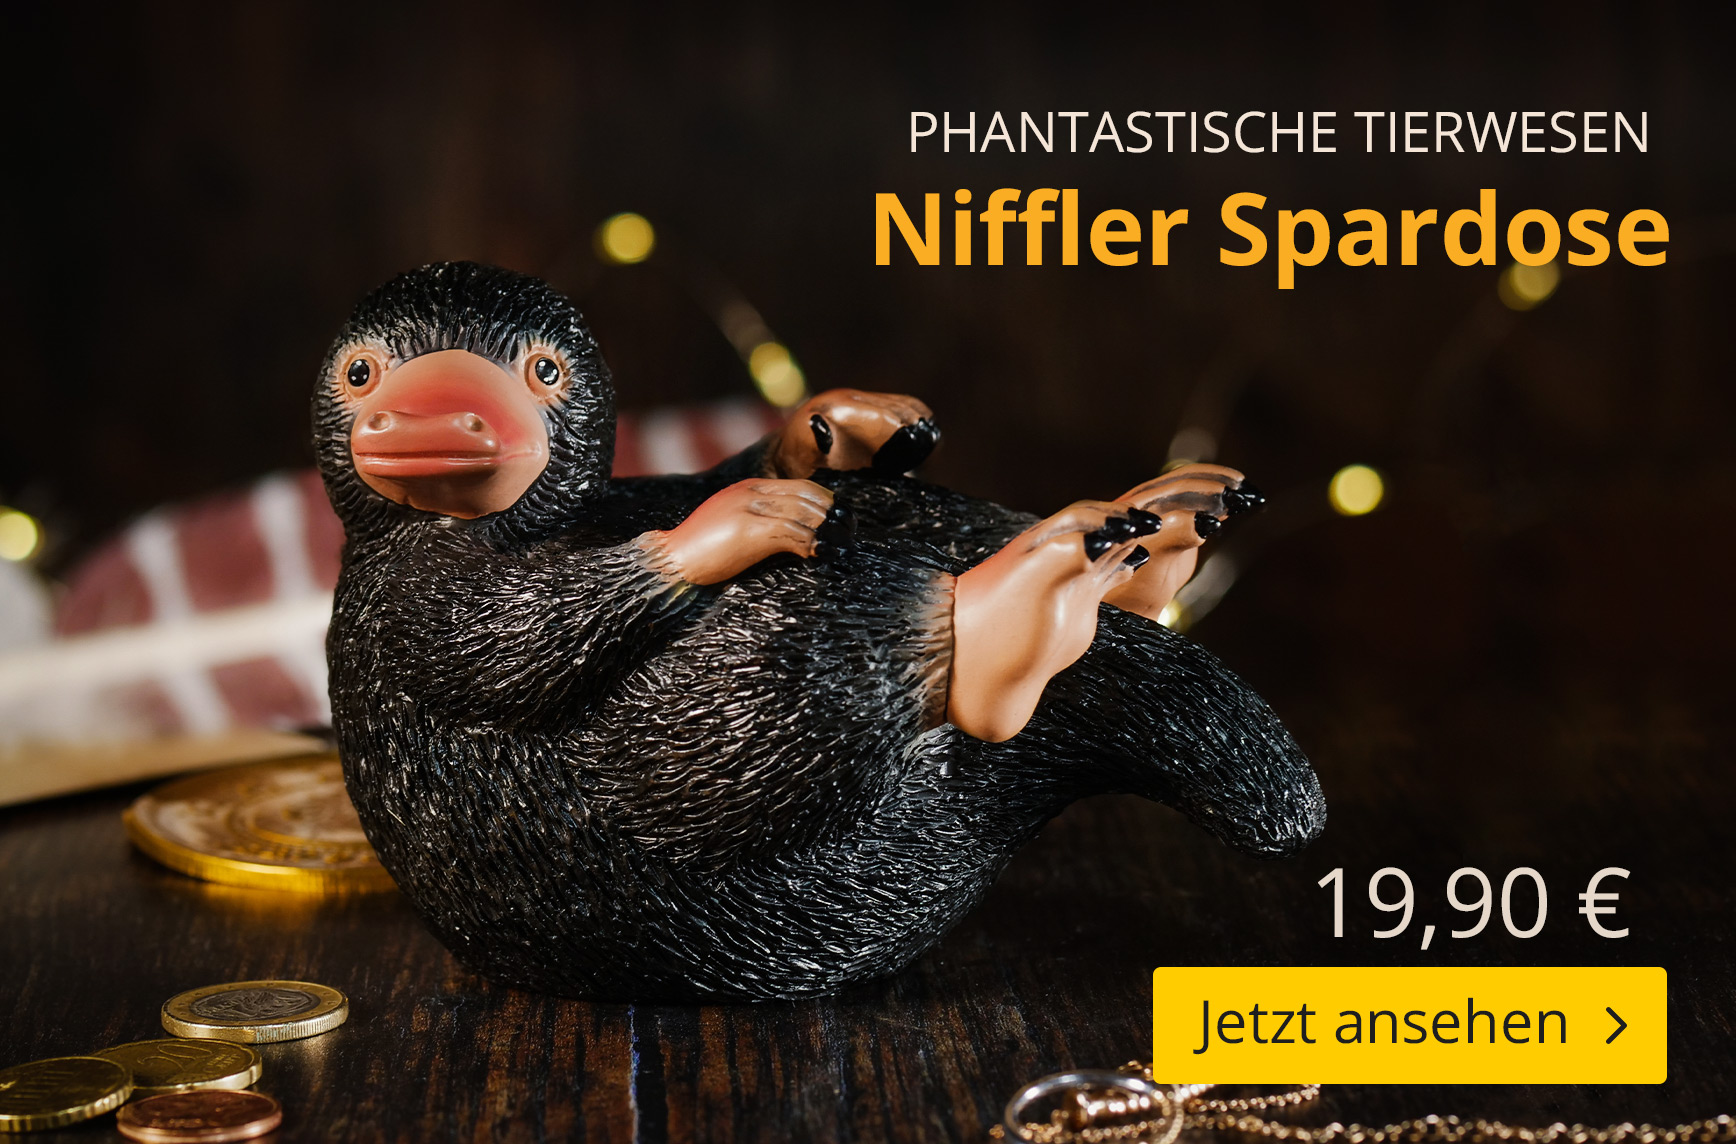 Niffler Spardose - Phantastische Tierwesen - 19,90 EUR